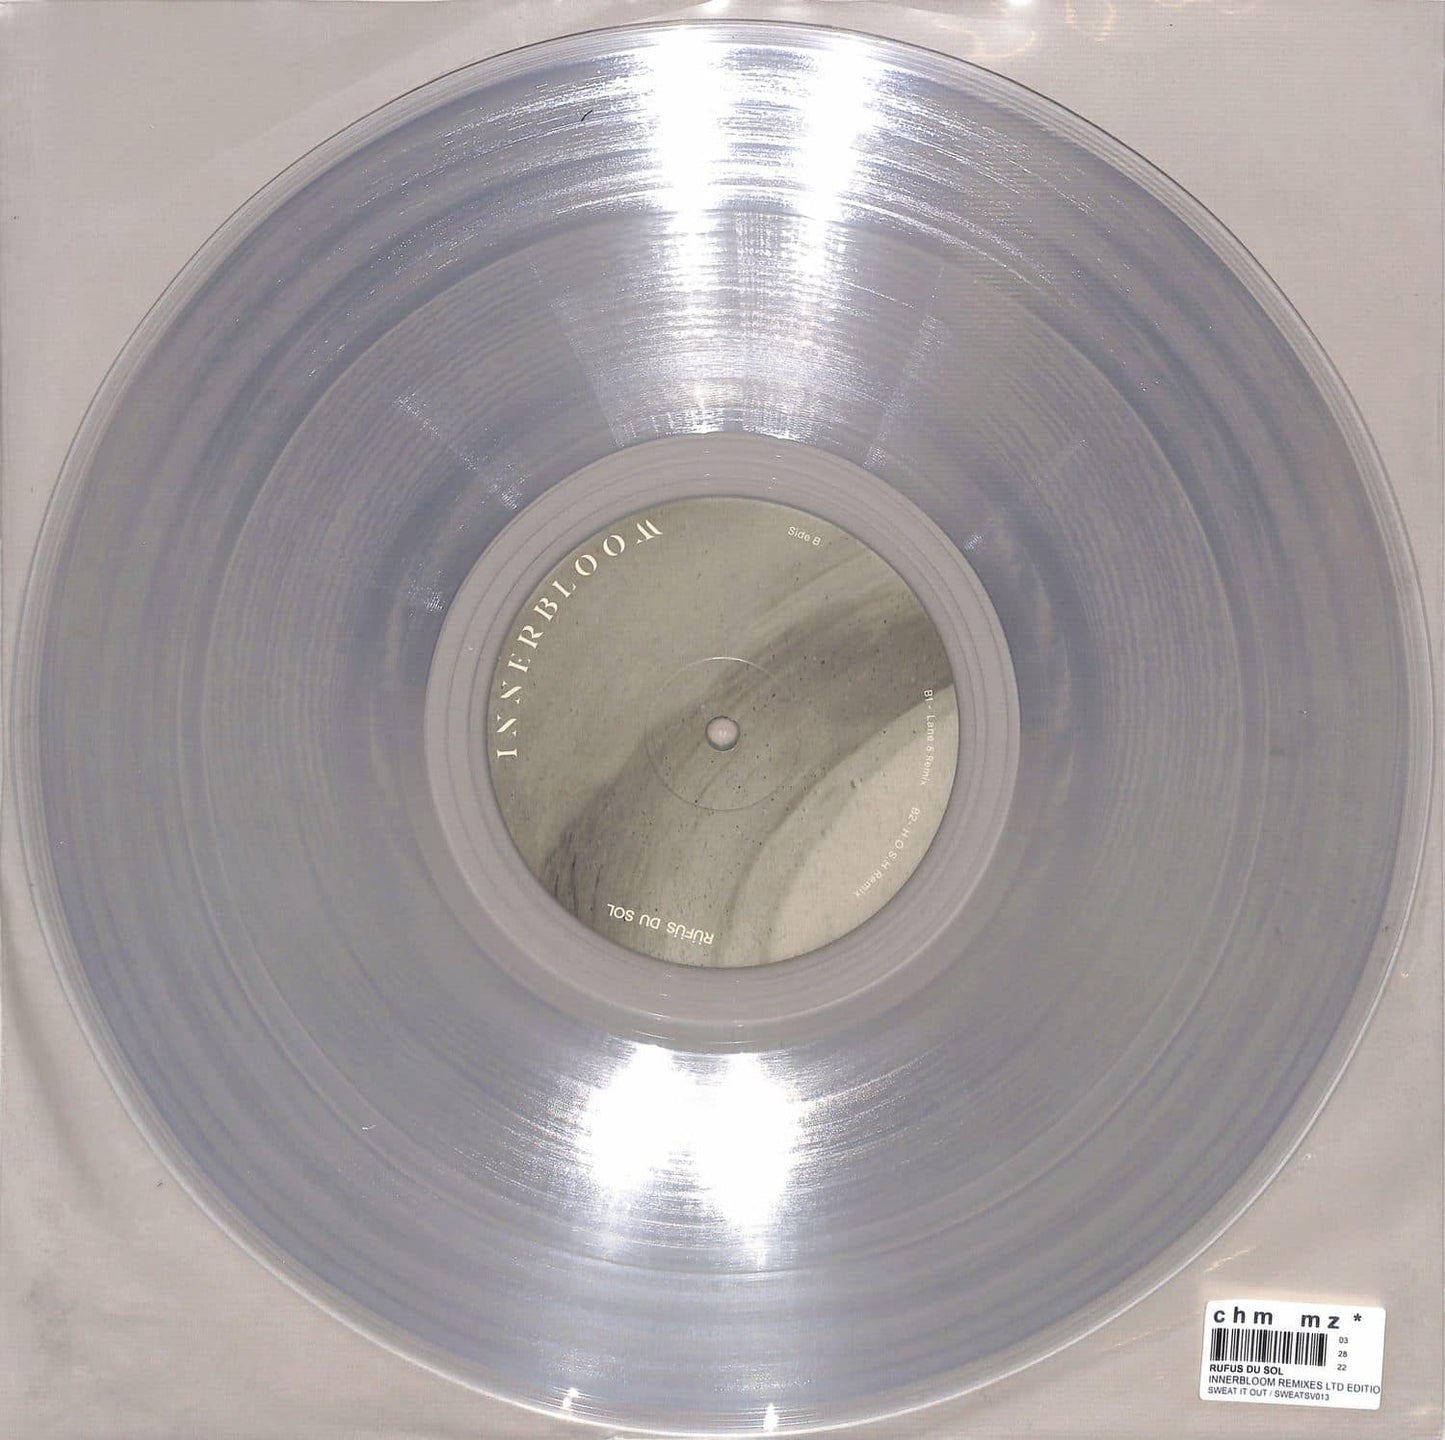 RUFUS DU SOL - Innerbloom (Sasha, HOSH & Lane 8 Remixes) [Sweat It Out] [Preventa]